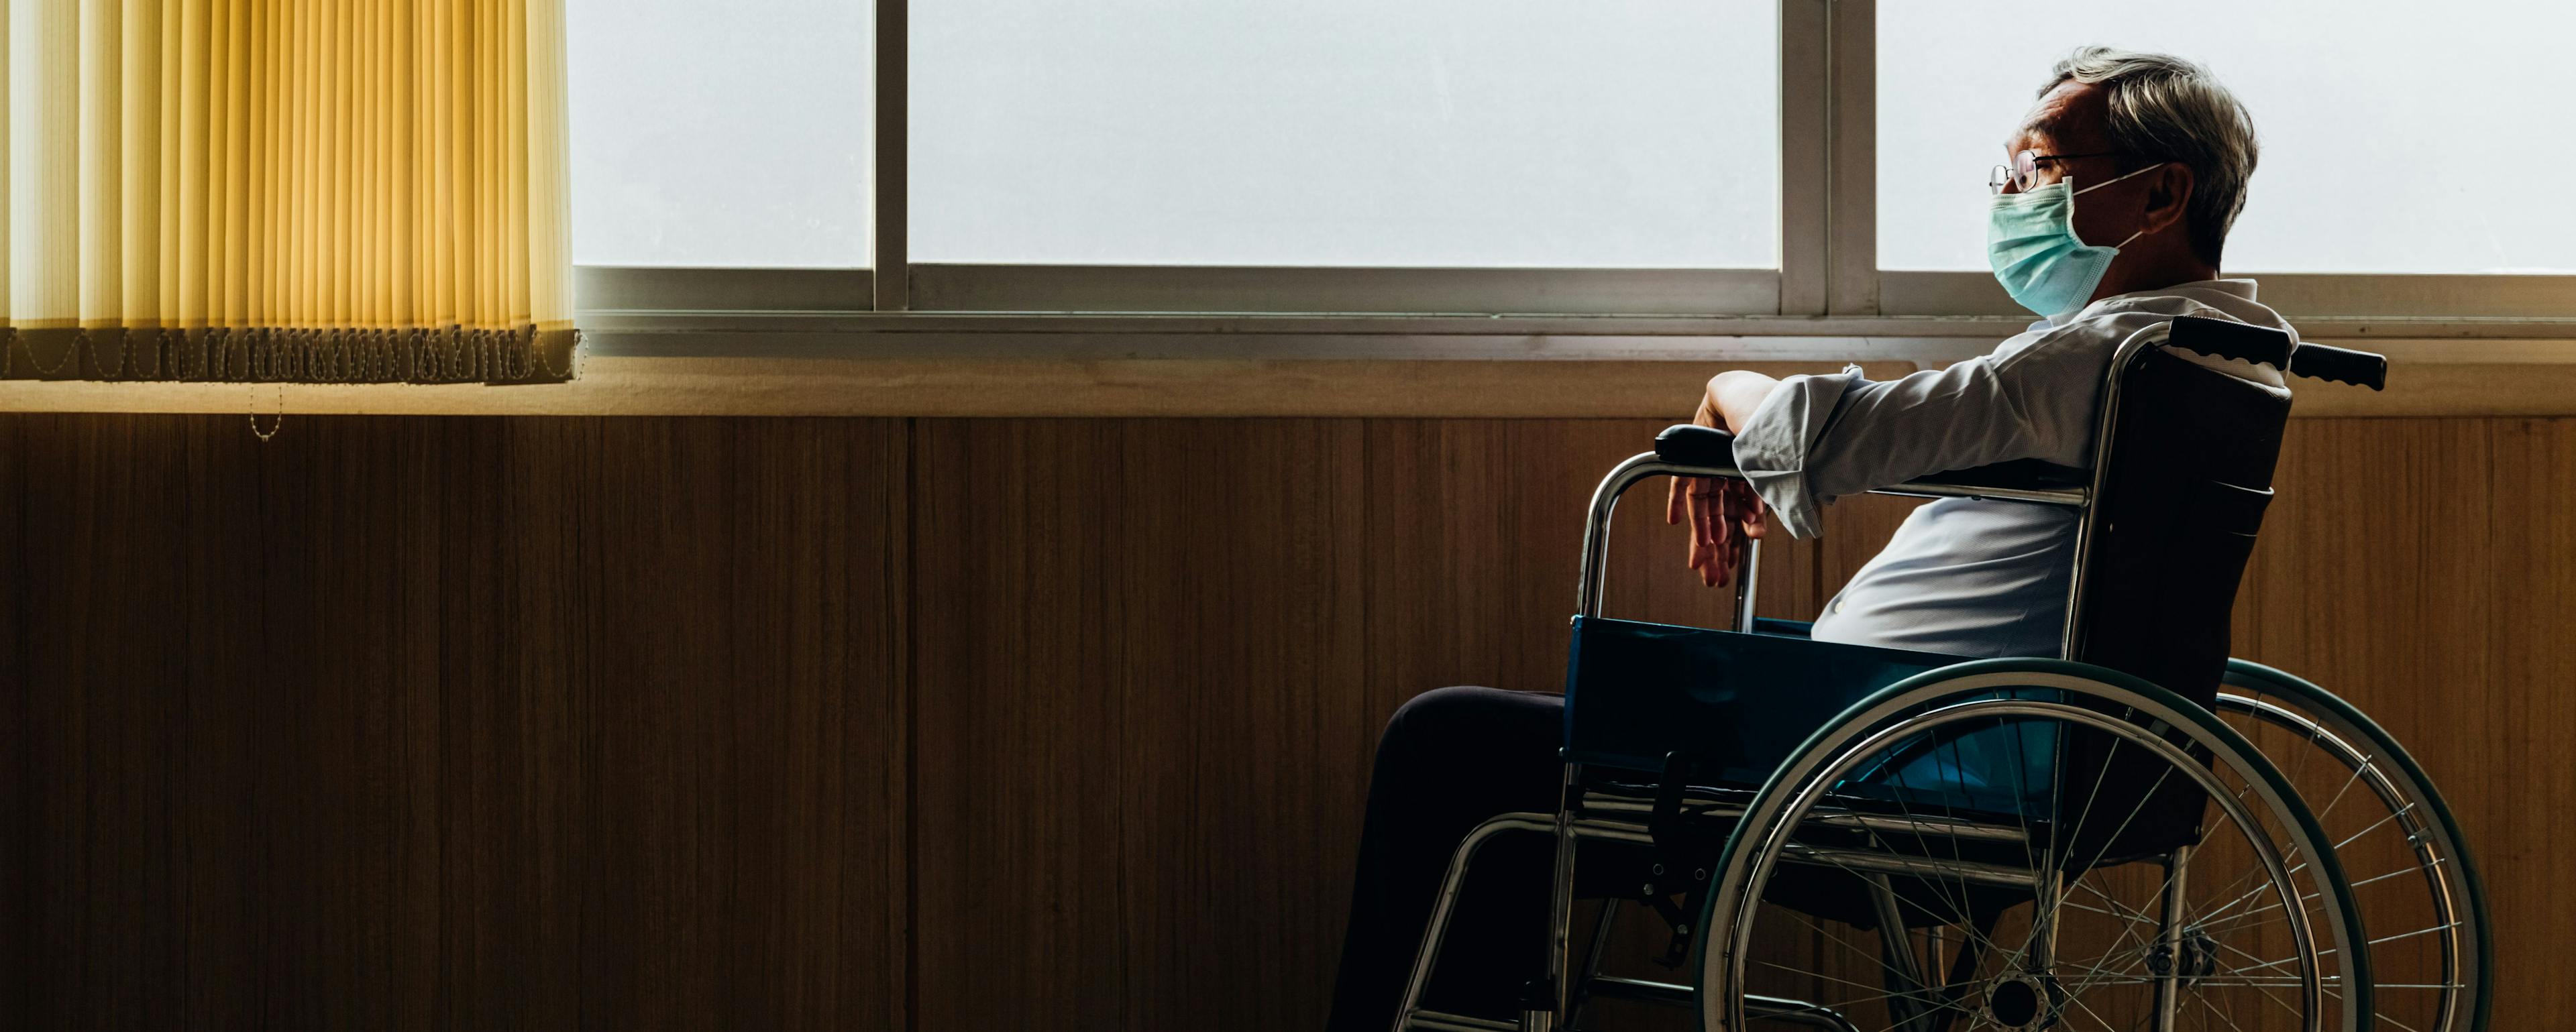 Nursing Home COVID Cases Increase Due to Community Spread